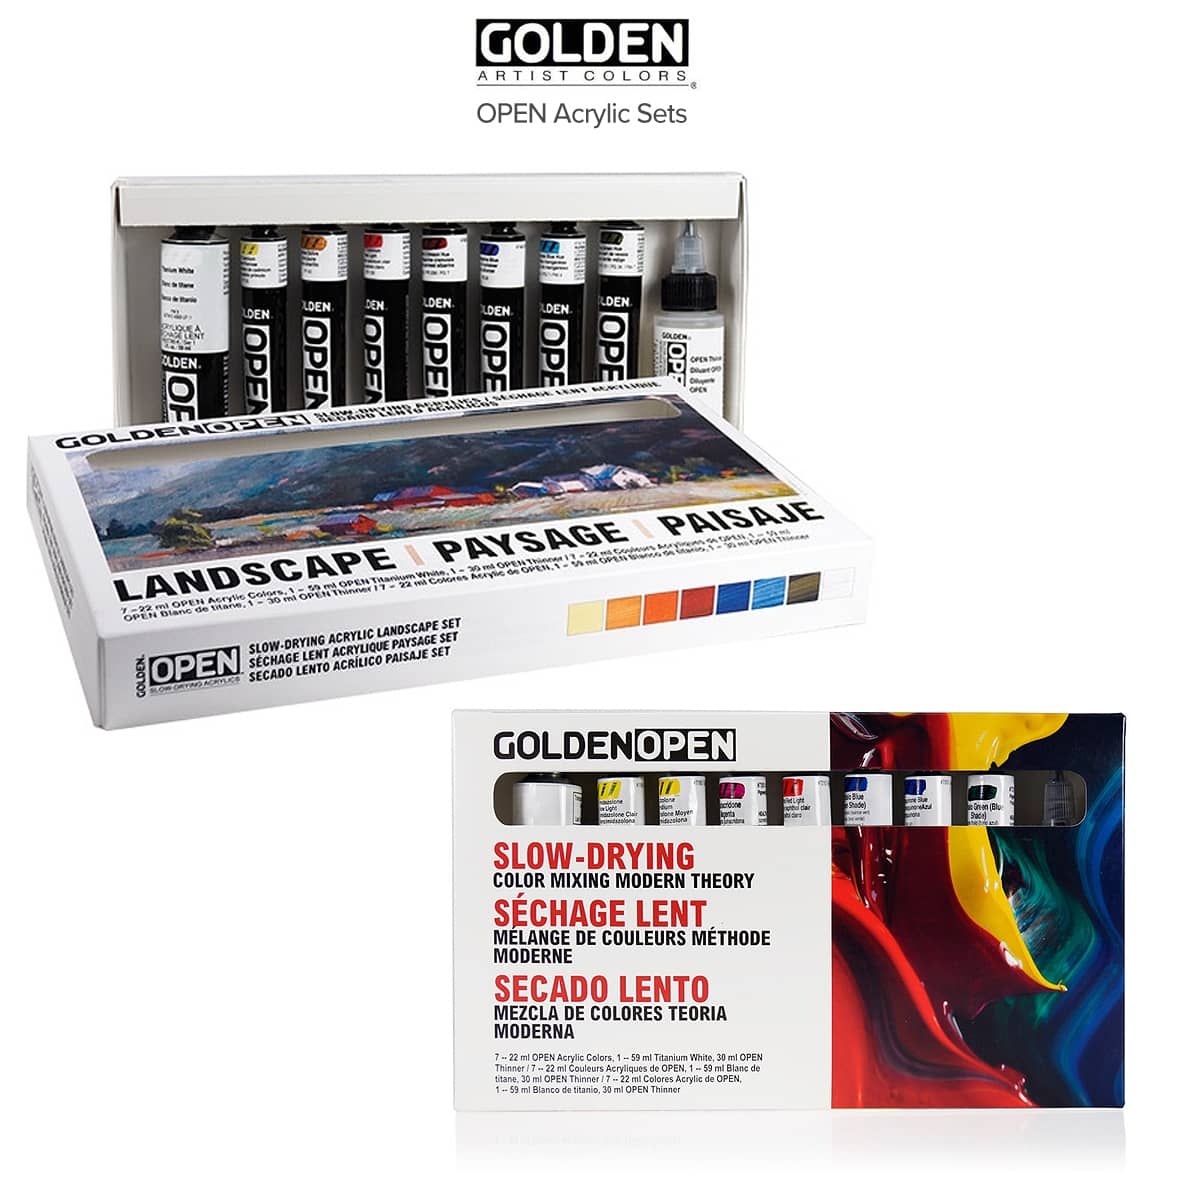 GOLDEN Open Acrylic Paint Sets